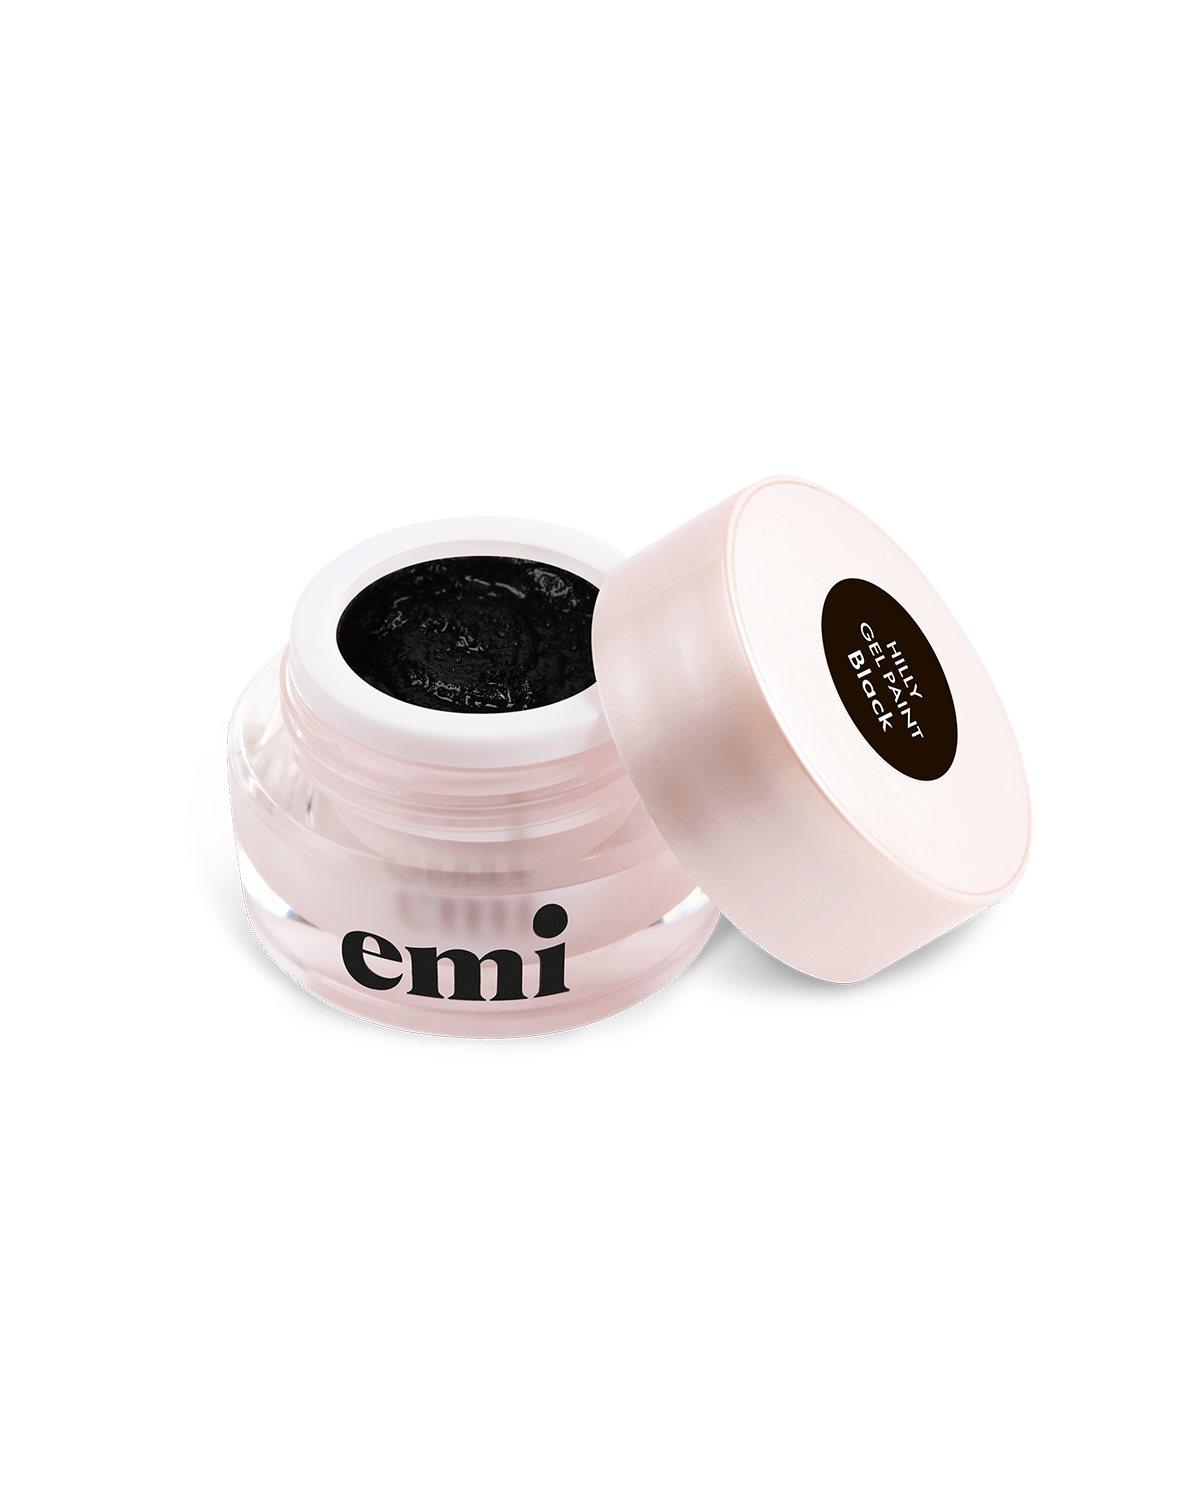 Гель для дизайна ногтей Emi Hilly gel paint №001 Black 5 г наклейки для ногтей emi объемные charmicon 3d silicone stickers 239 баланс